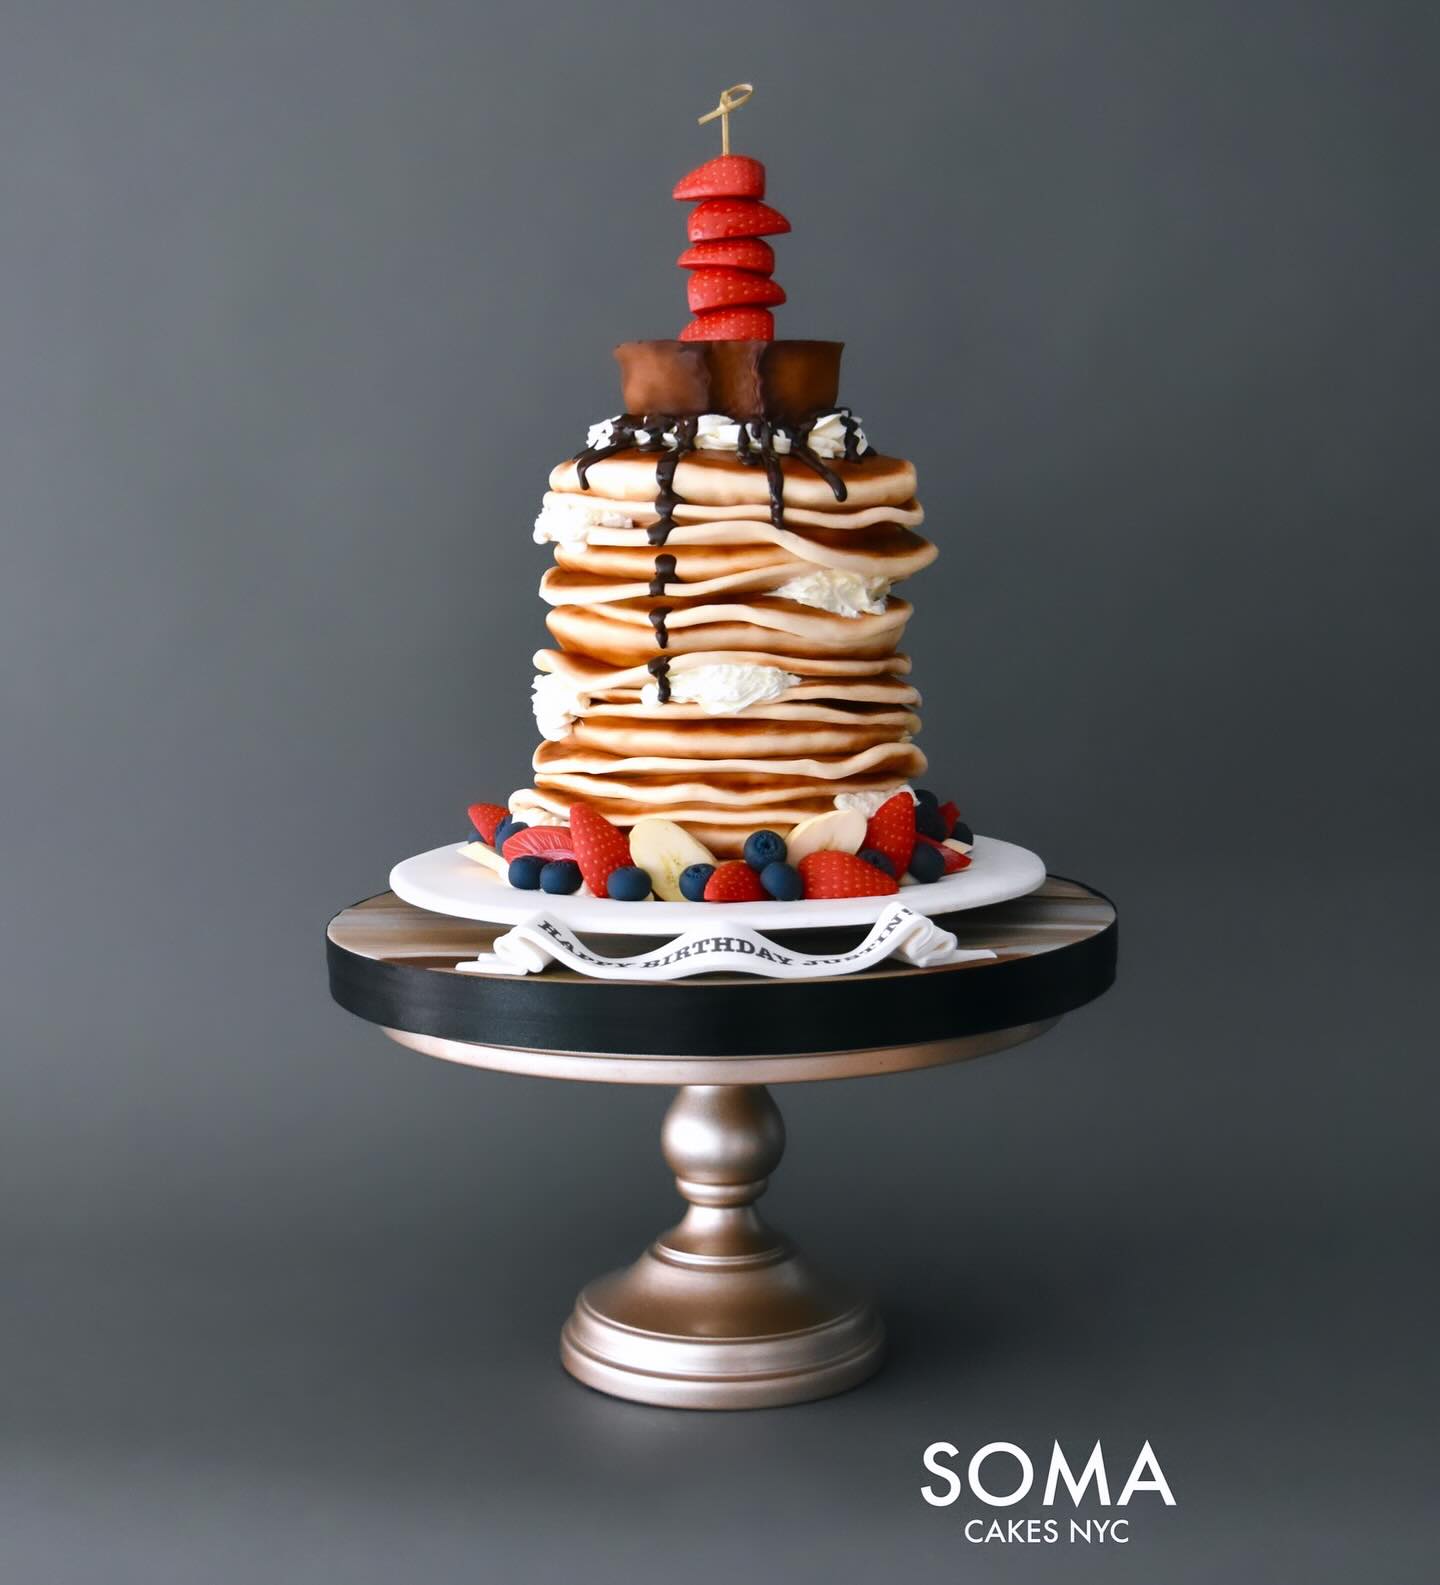 Soma Cakes NYC